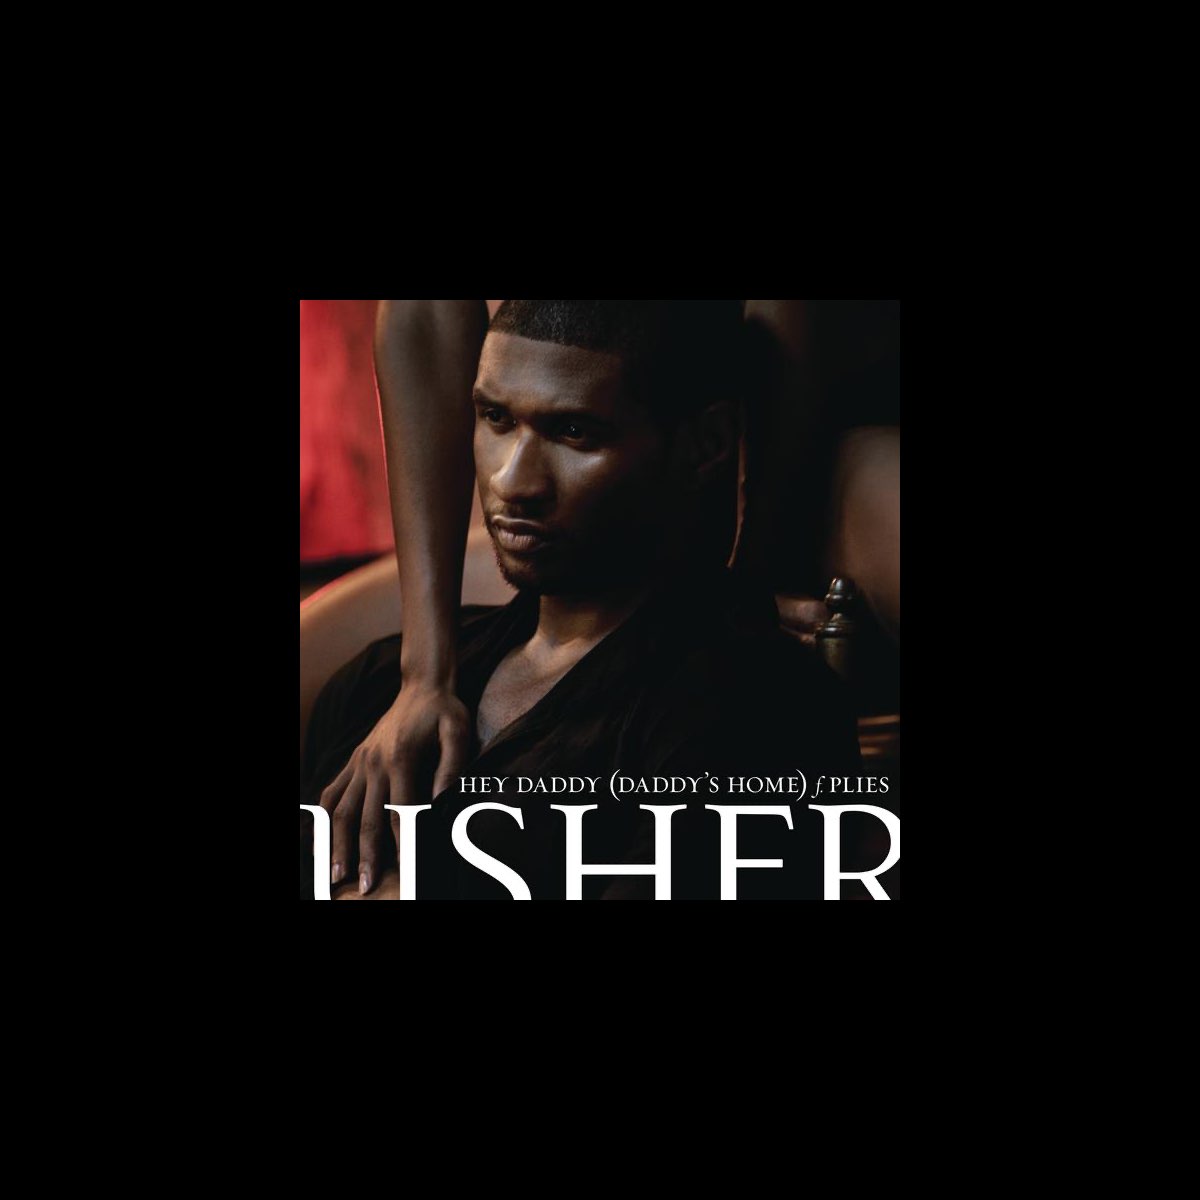 Daddy home usher. Usher Daddy's Home. Hey Daddy Usher. Hey Daddy (Daddy's Home) [feat. Plies]. Музыка от Hey Daddy.